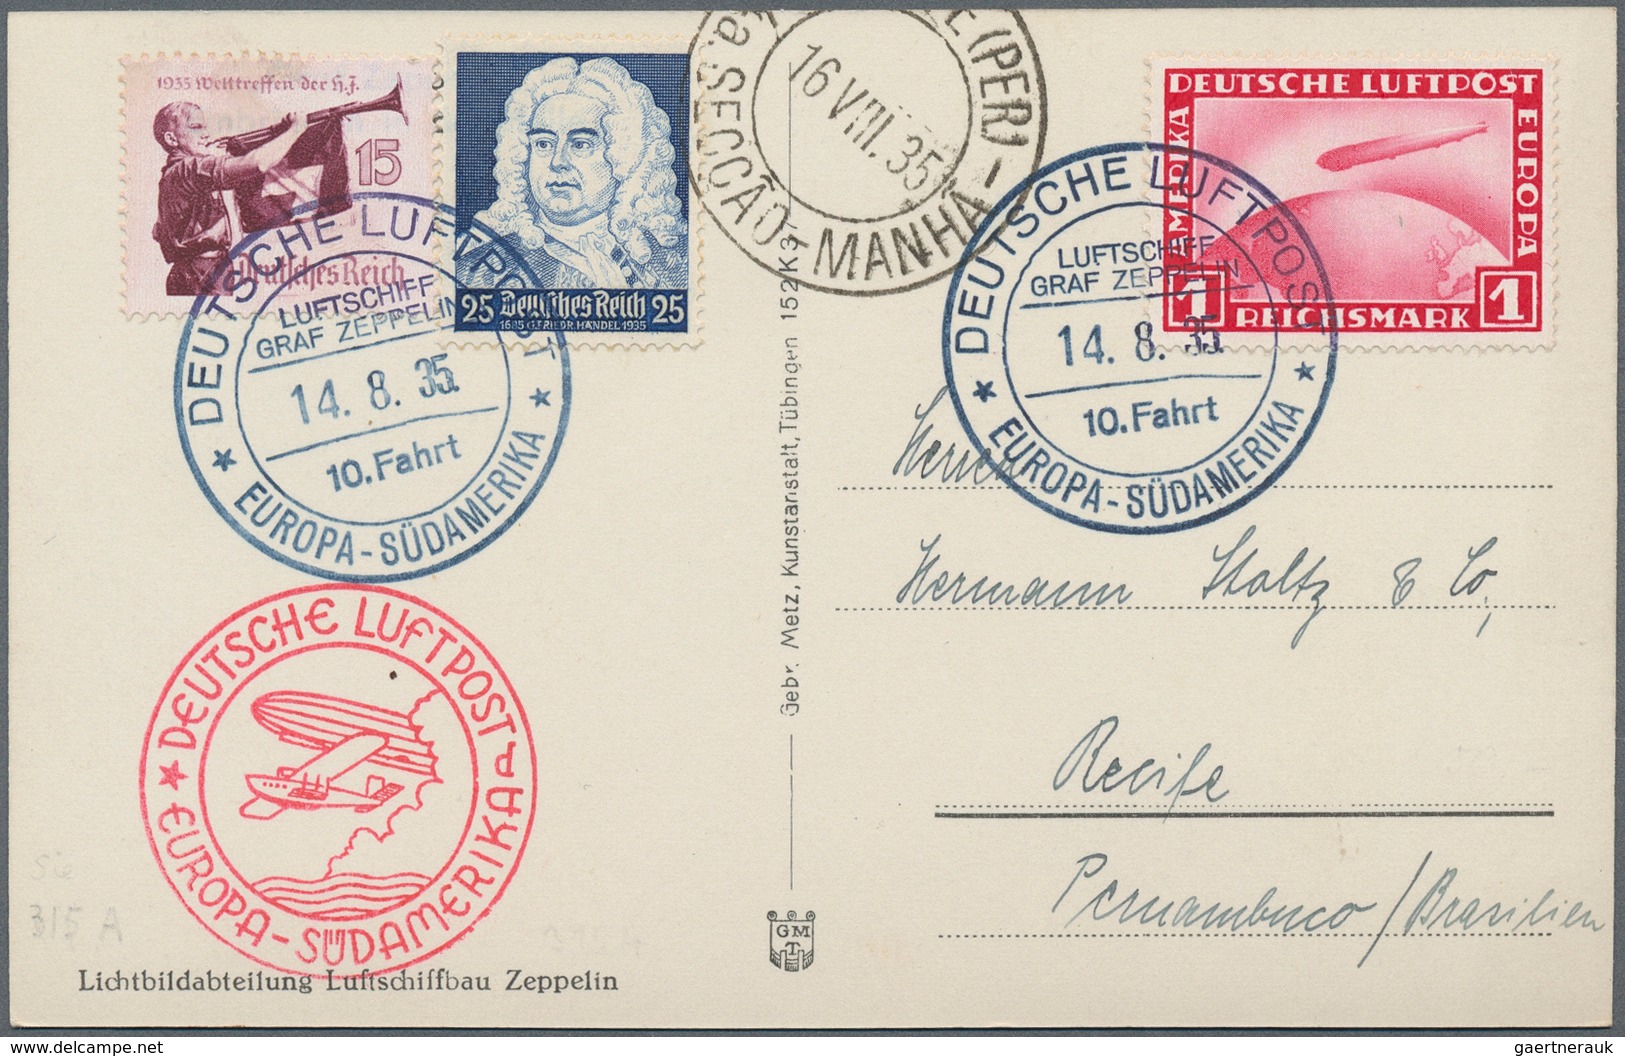 Flugpost Deutschland: Over 140 Zeppelin Postcards, Mostly Real Photos With The Largest Part Pioneer - Luft- Und Zeppelinpost